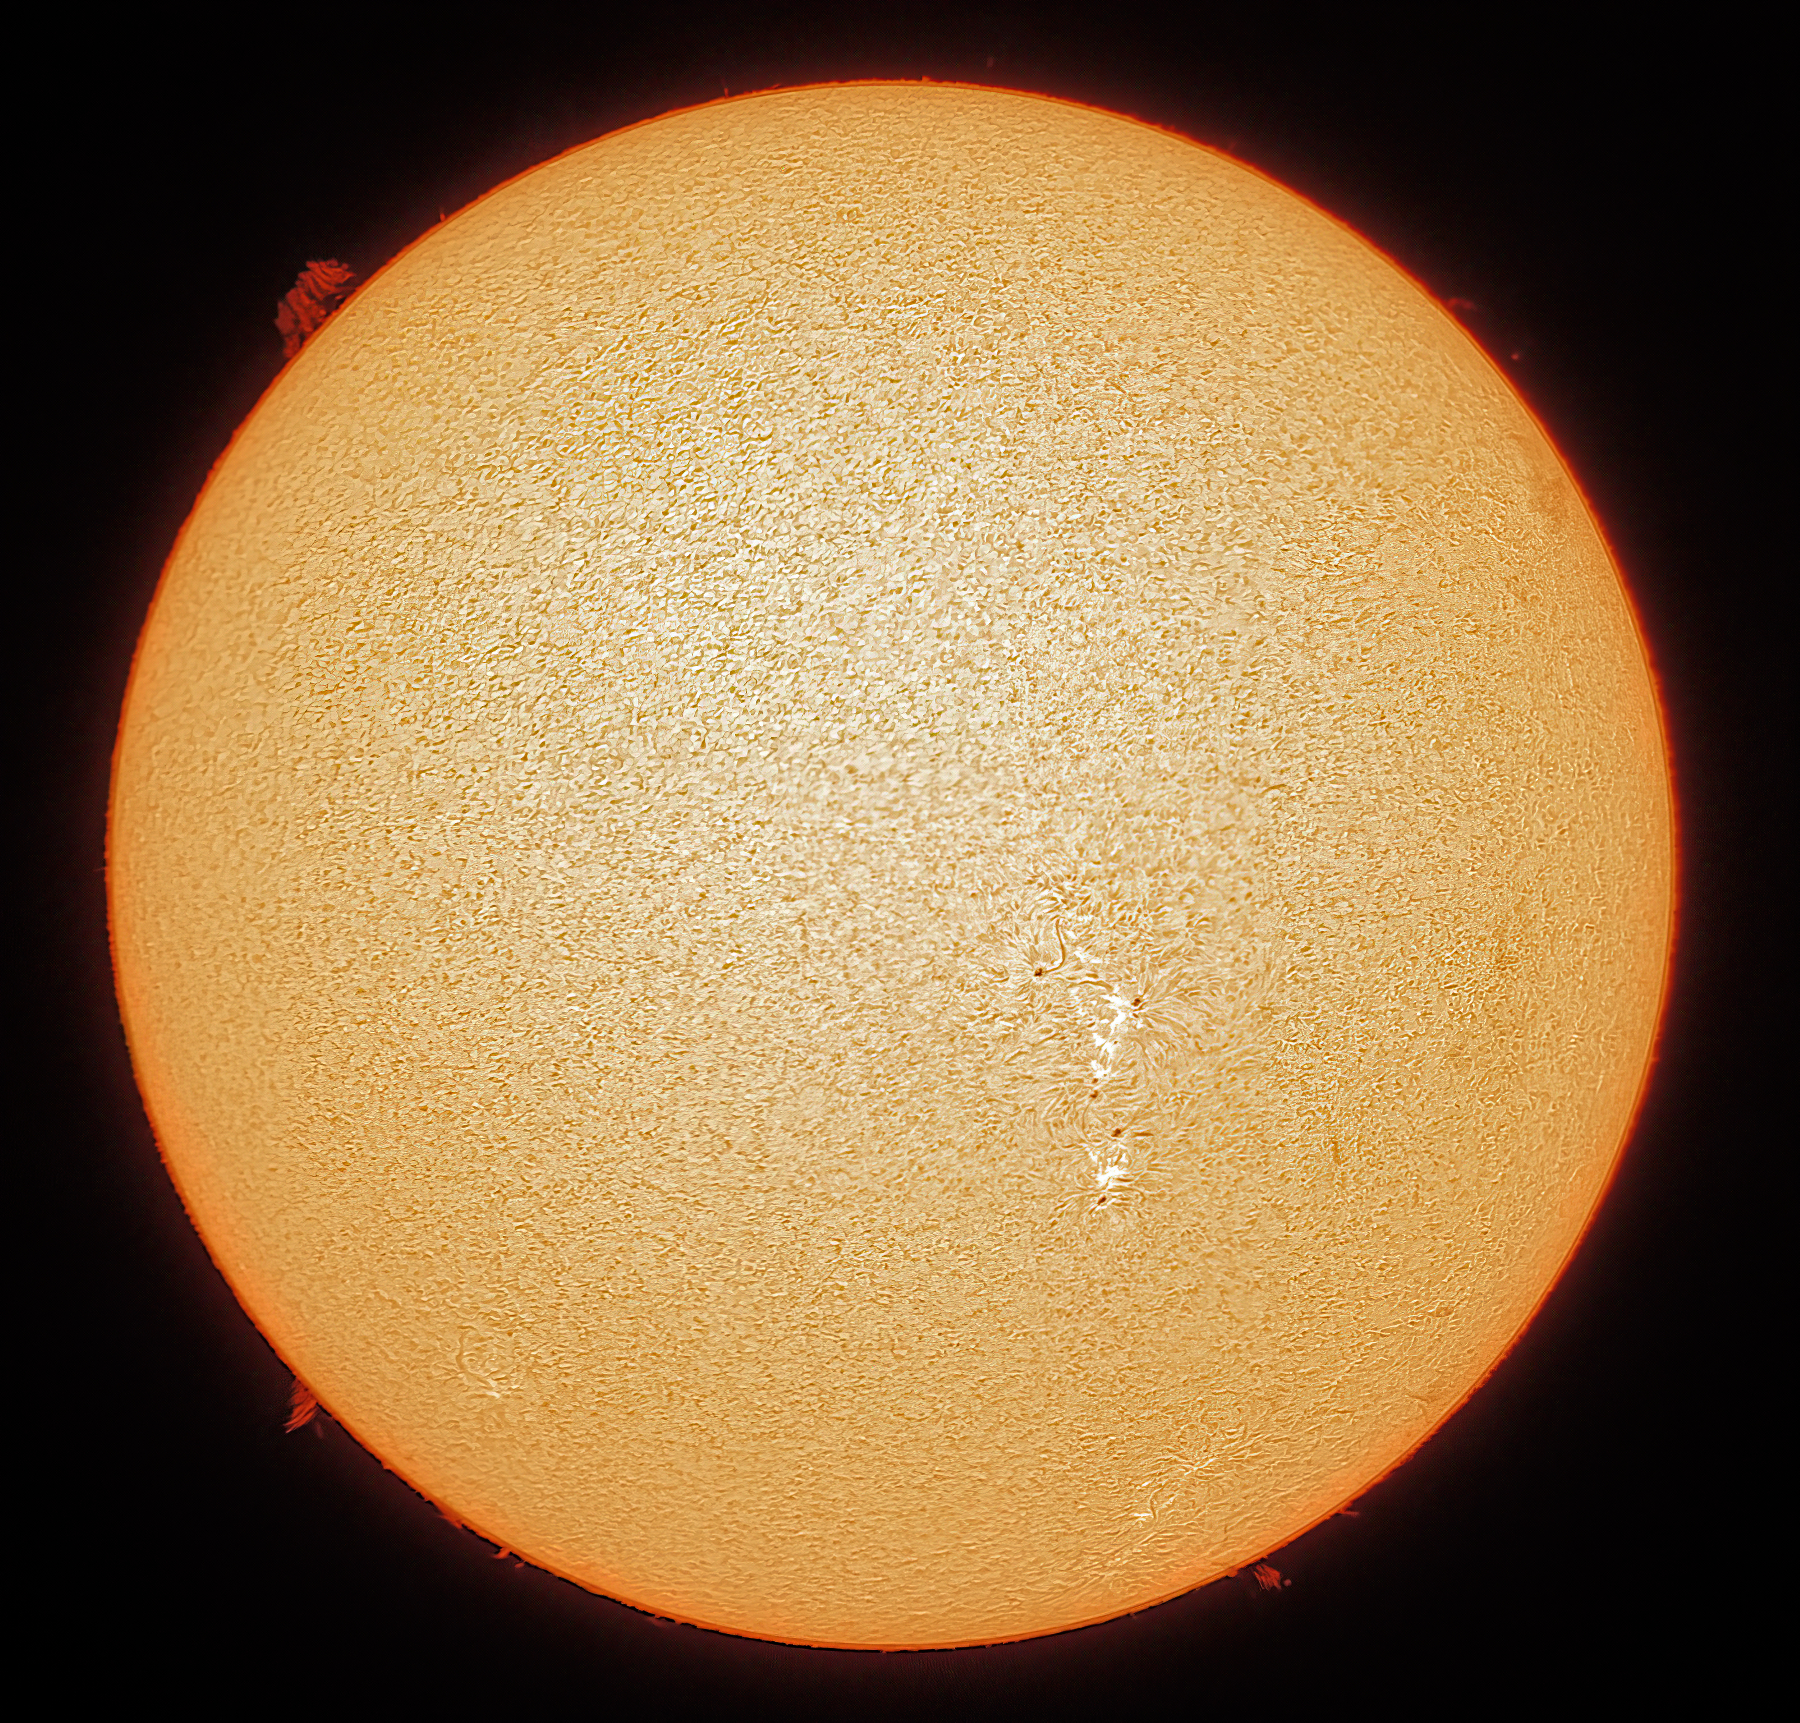 sun2021-04-26gig.jpg